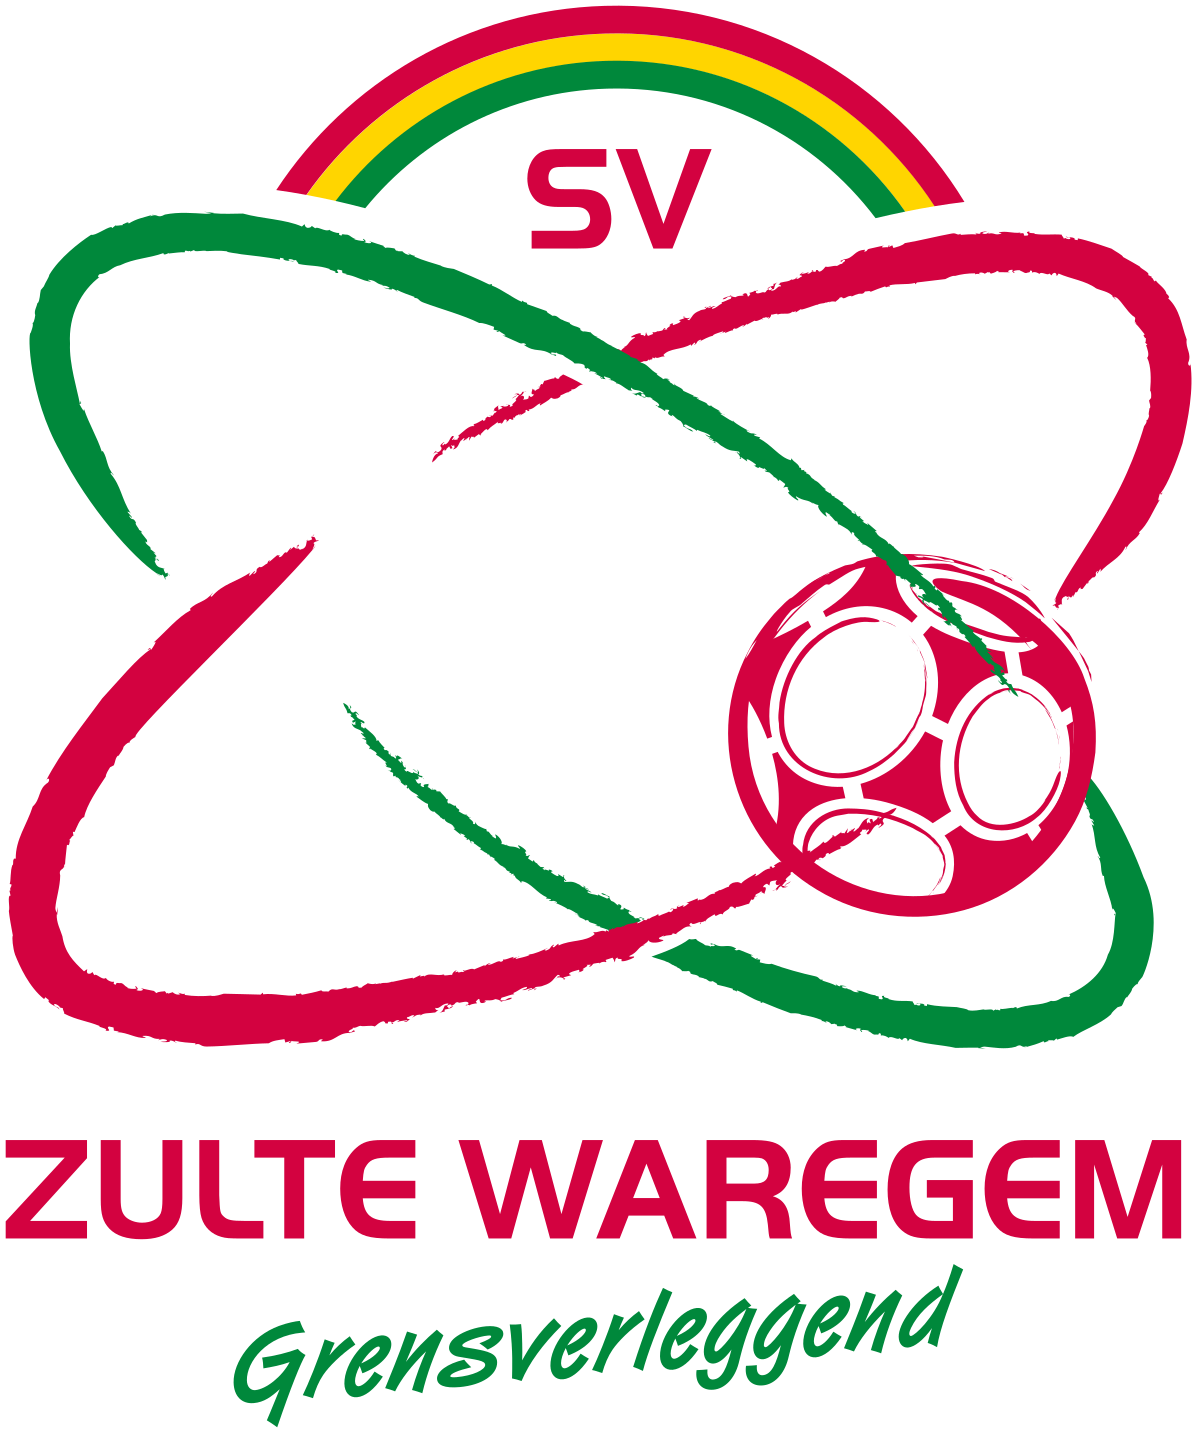 Zulte-Waregem-2 logo